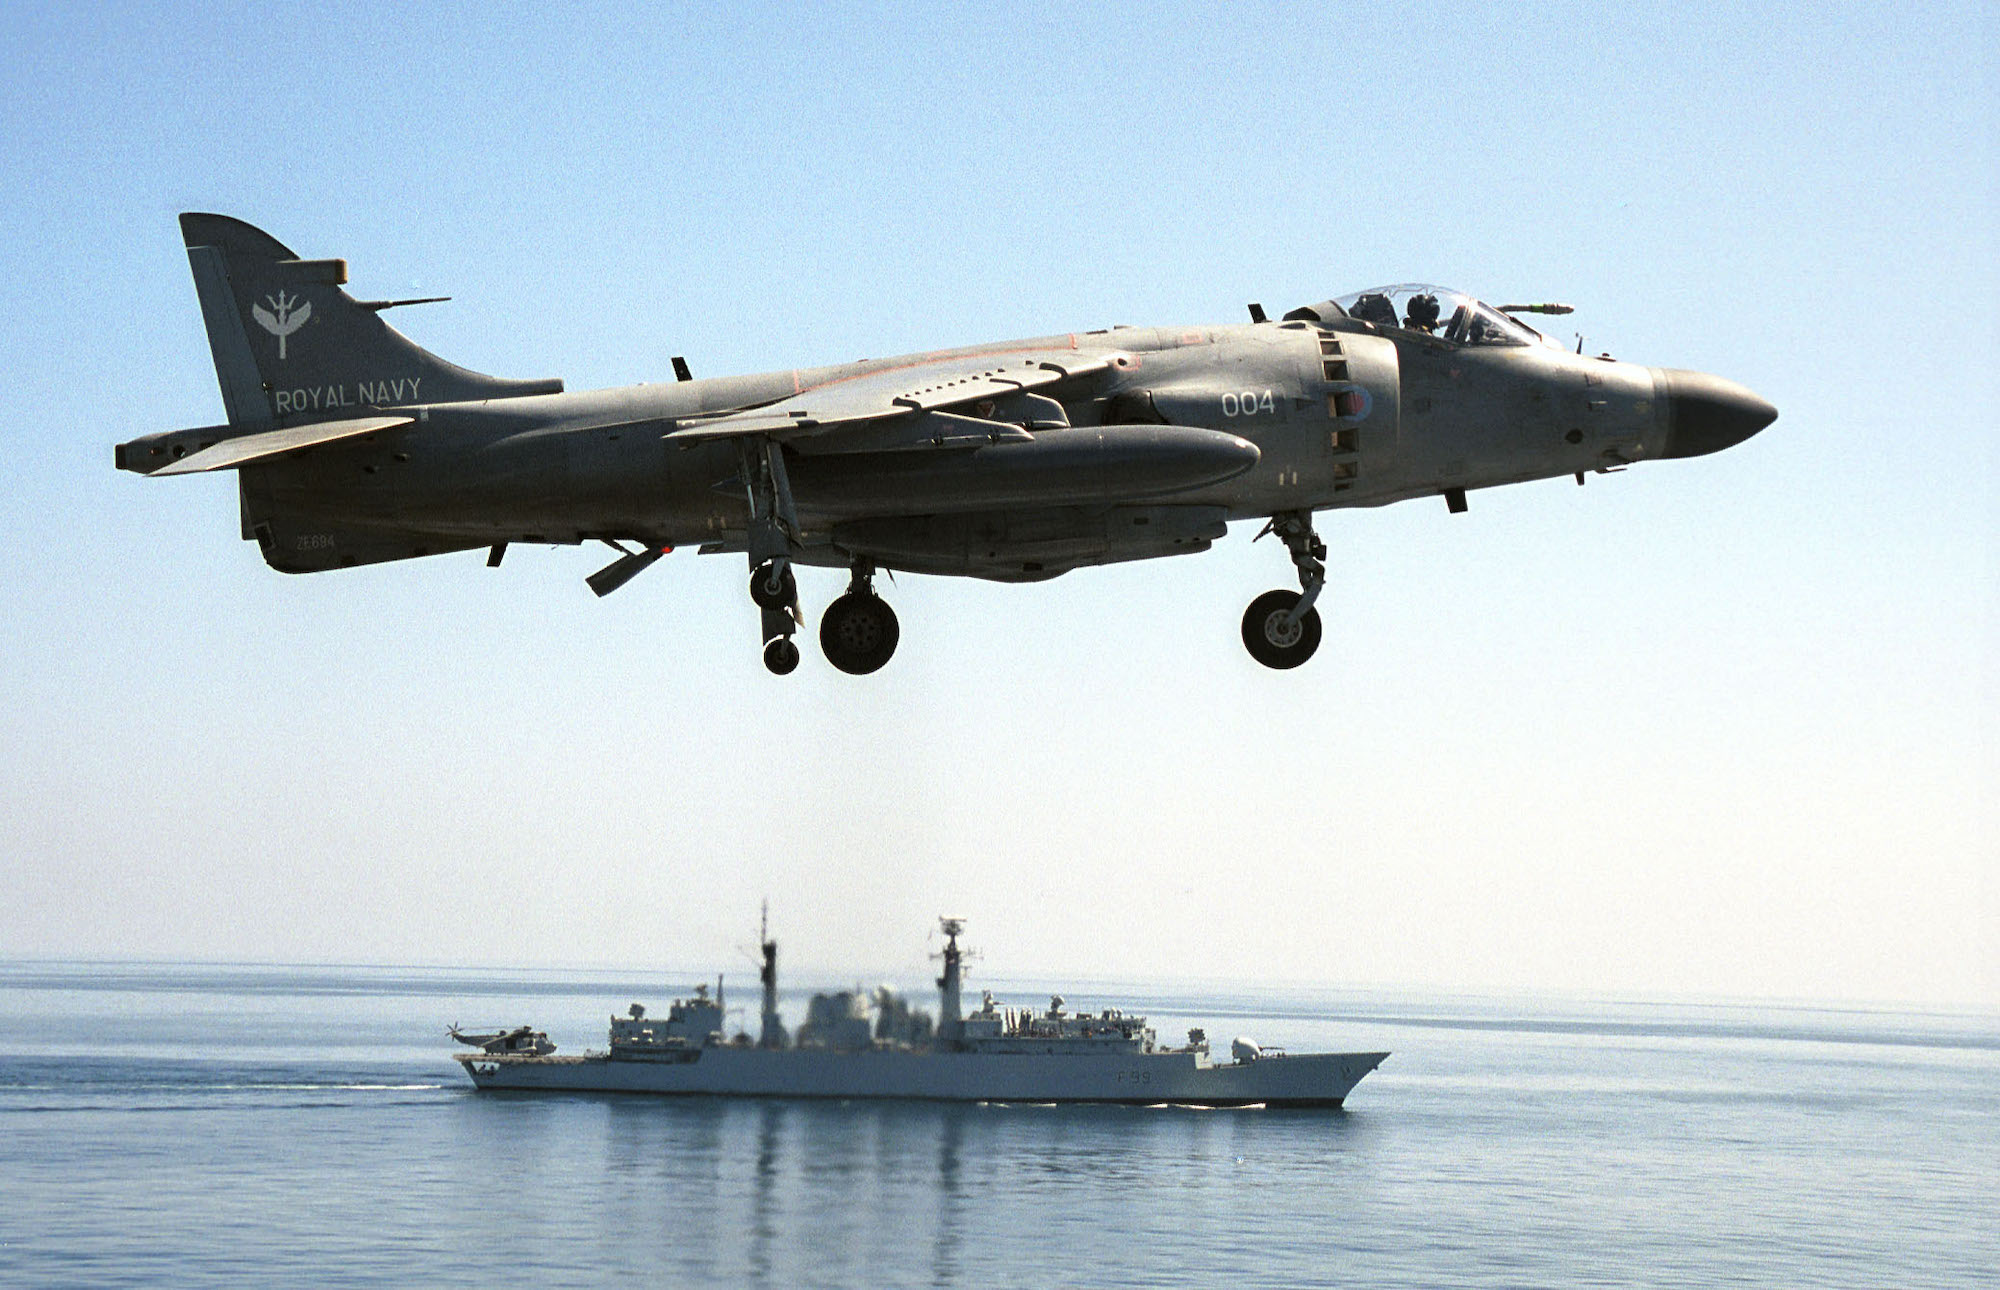 A British Royal Navy Harrier jump-jet, taking off